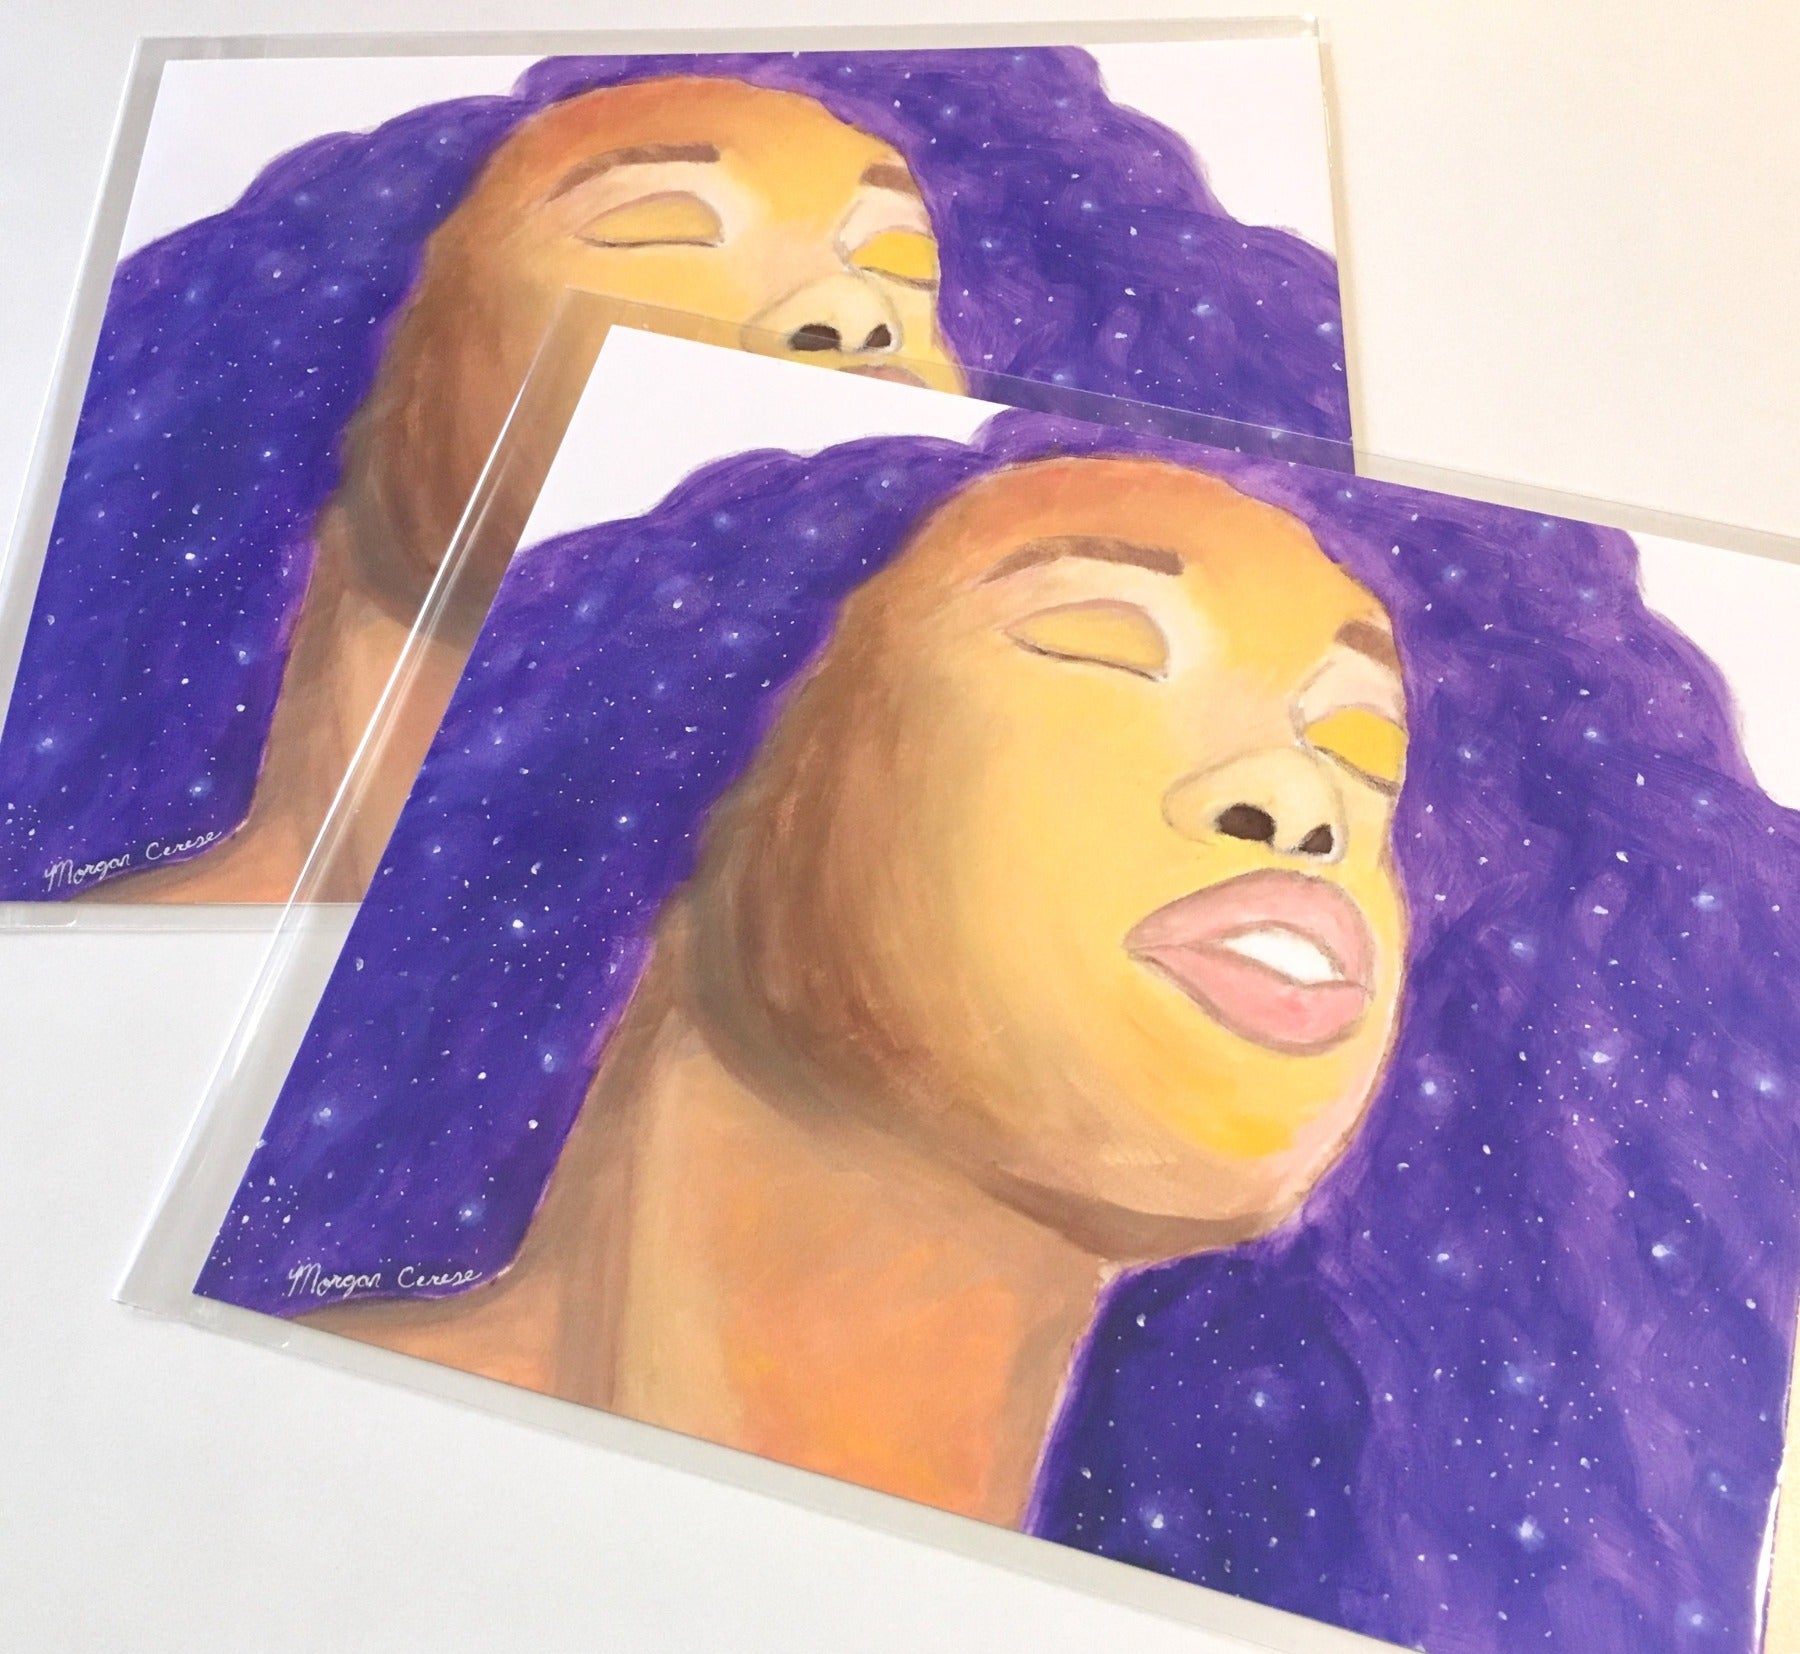 Glow Up Art Print - Melanin Black Girl With Purple Hair - Morgan Cerese Art